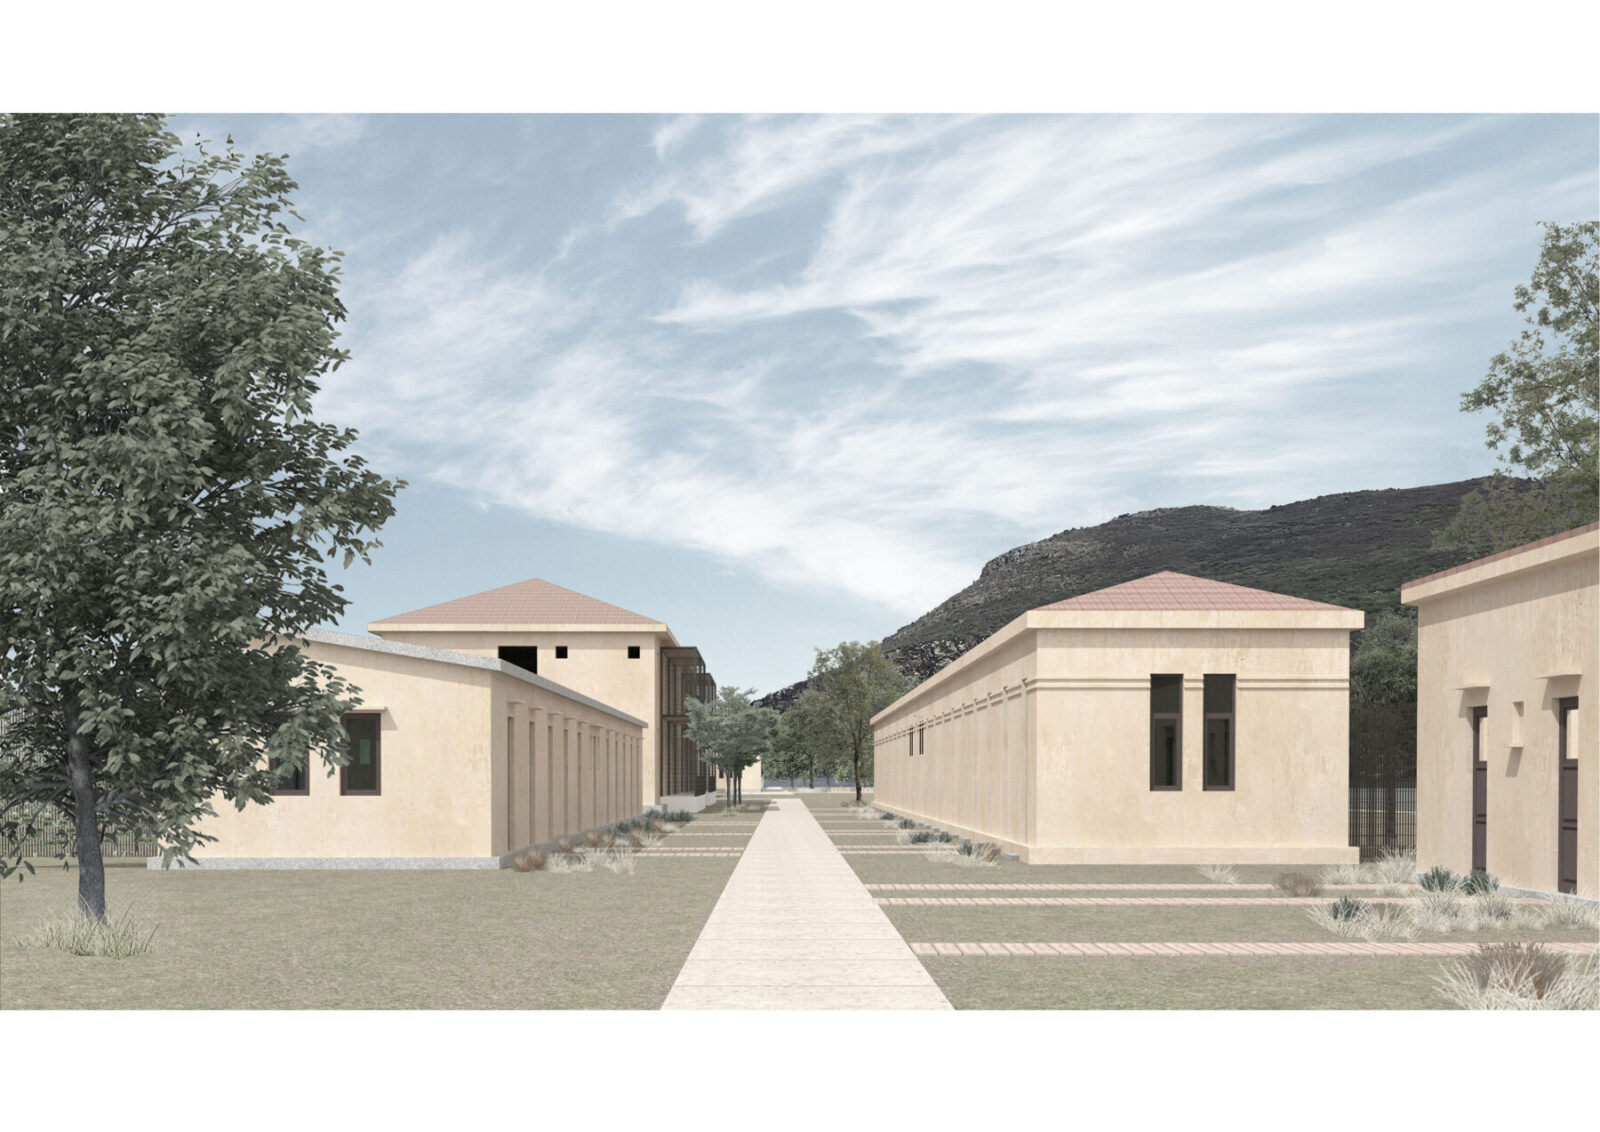 Archisearch Θέρετρο νήσος_Αναβίωση, Ανασχεδιασμός των εγκαταστάσεων στη λίμνη Καϊάφα | Διπλωματική εργασία από την Λιάρου Σοφία